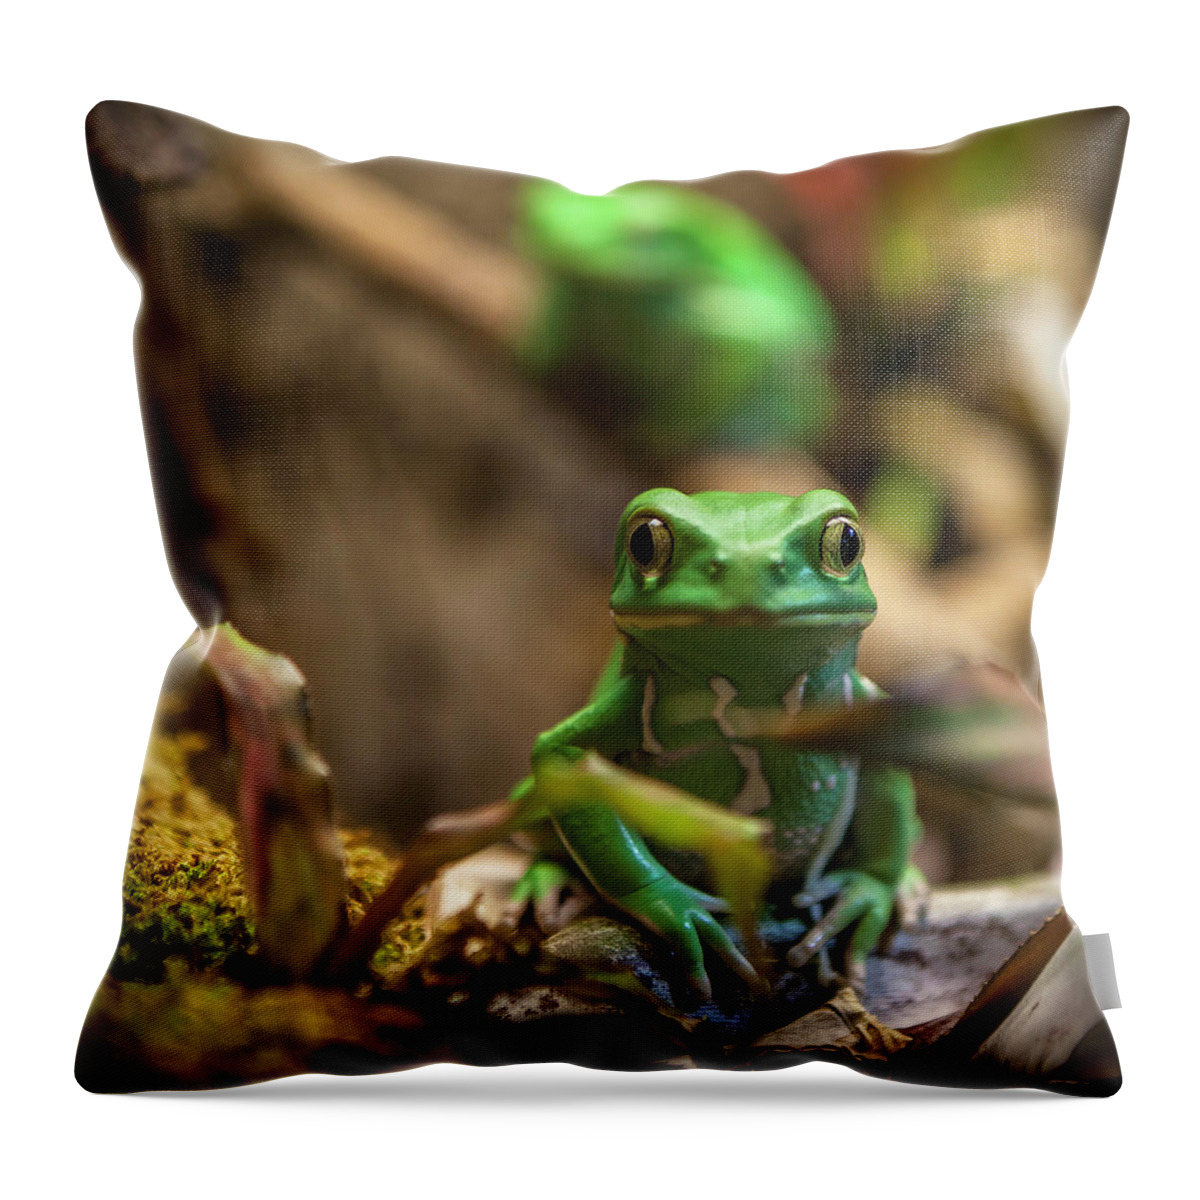 Atlanta Throw Pillow featuring the photograph Monkey Frog by C. Fredrickson Photography